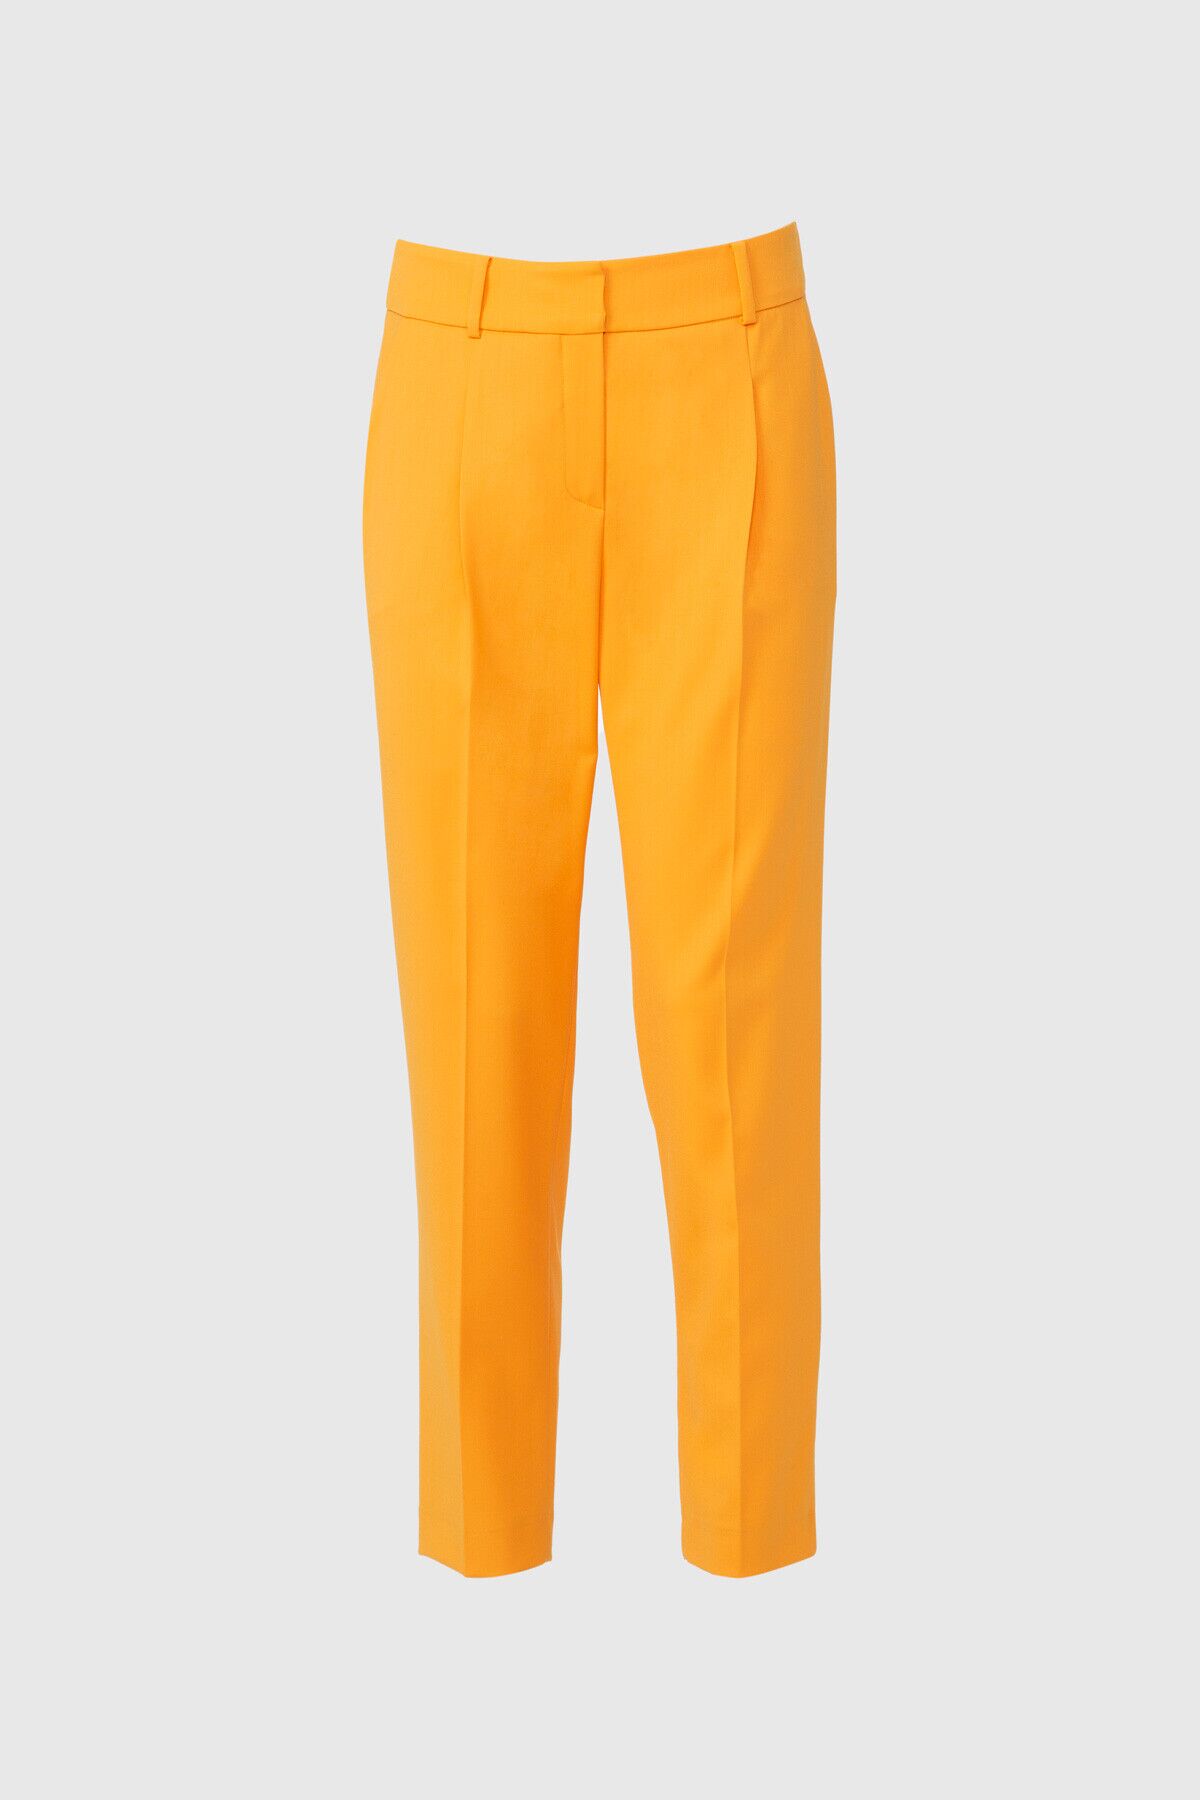  GIZIA - Classic Ankle Length Orange Trousers